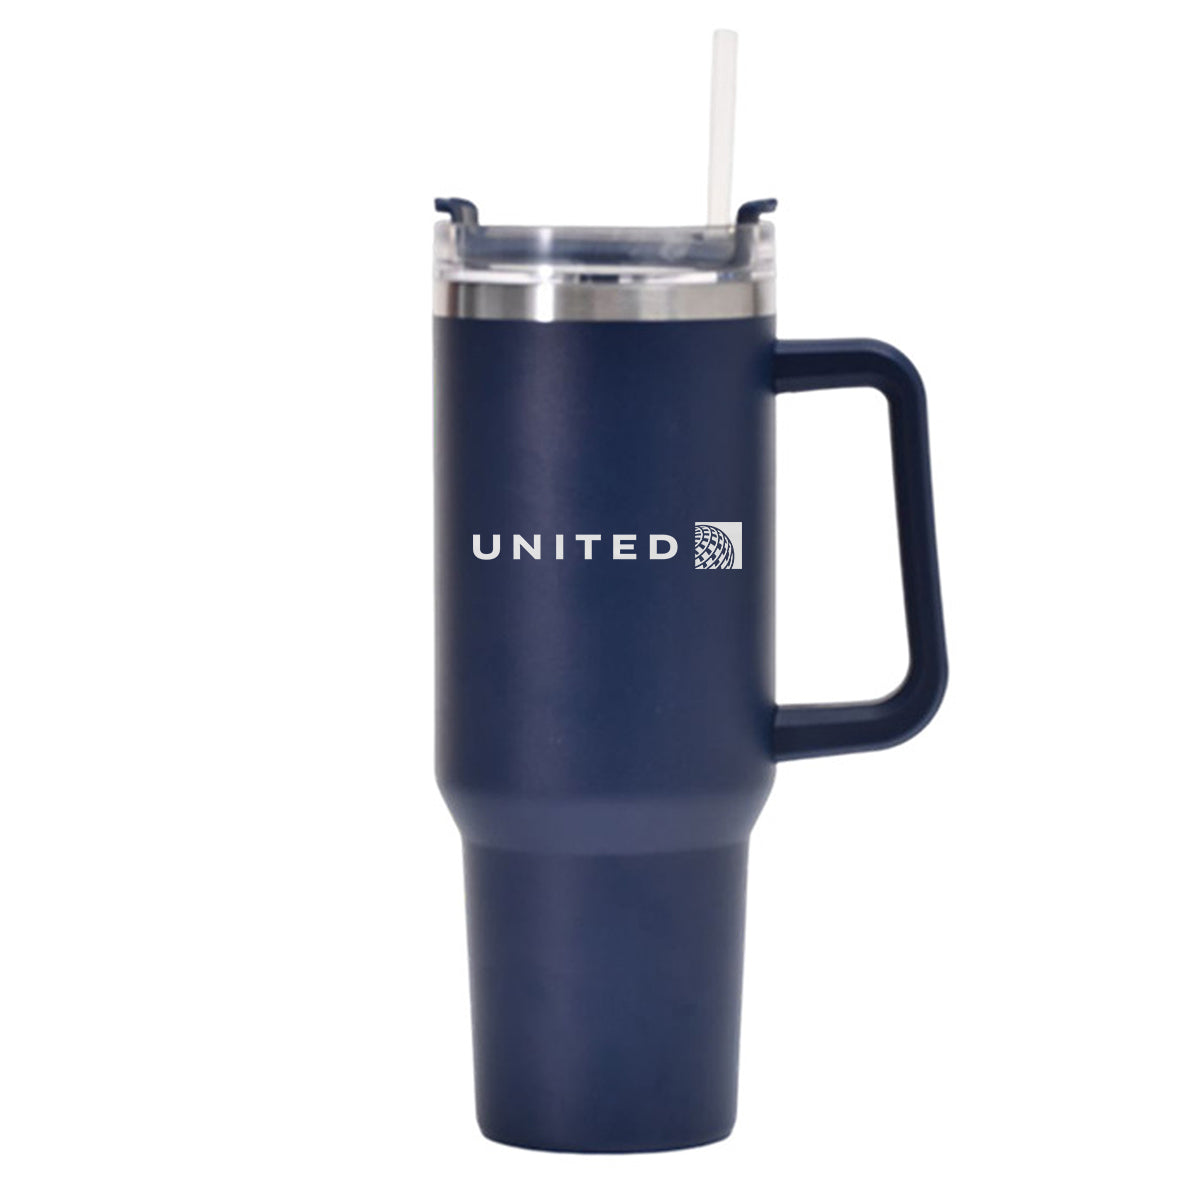 United Airlines Designed 40oz Stainless Steel Car Mug With Holder